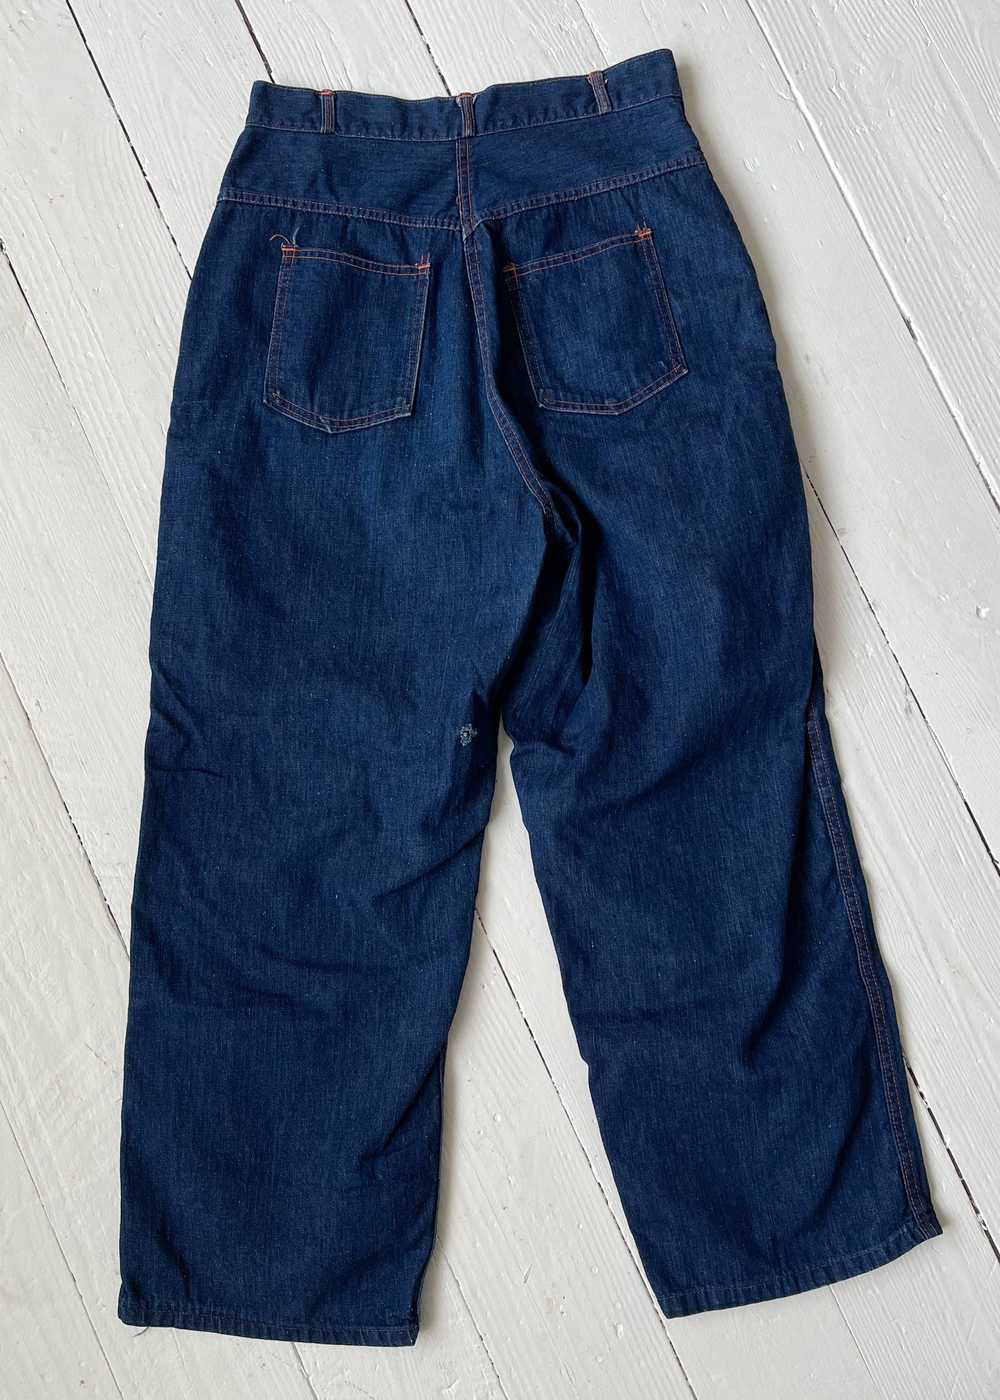 Vintage 1950s Side Zip Jeans - image 4